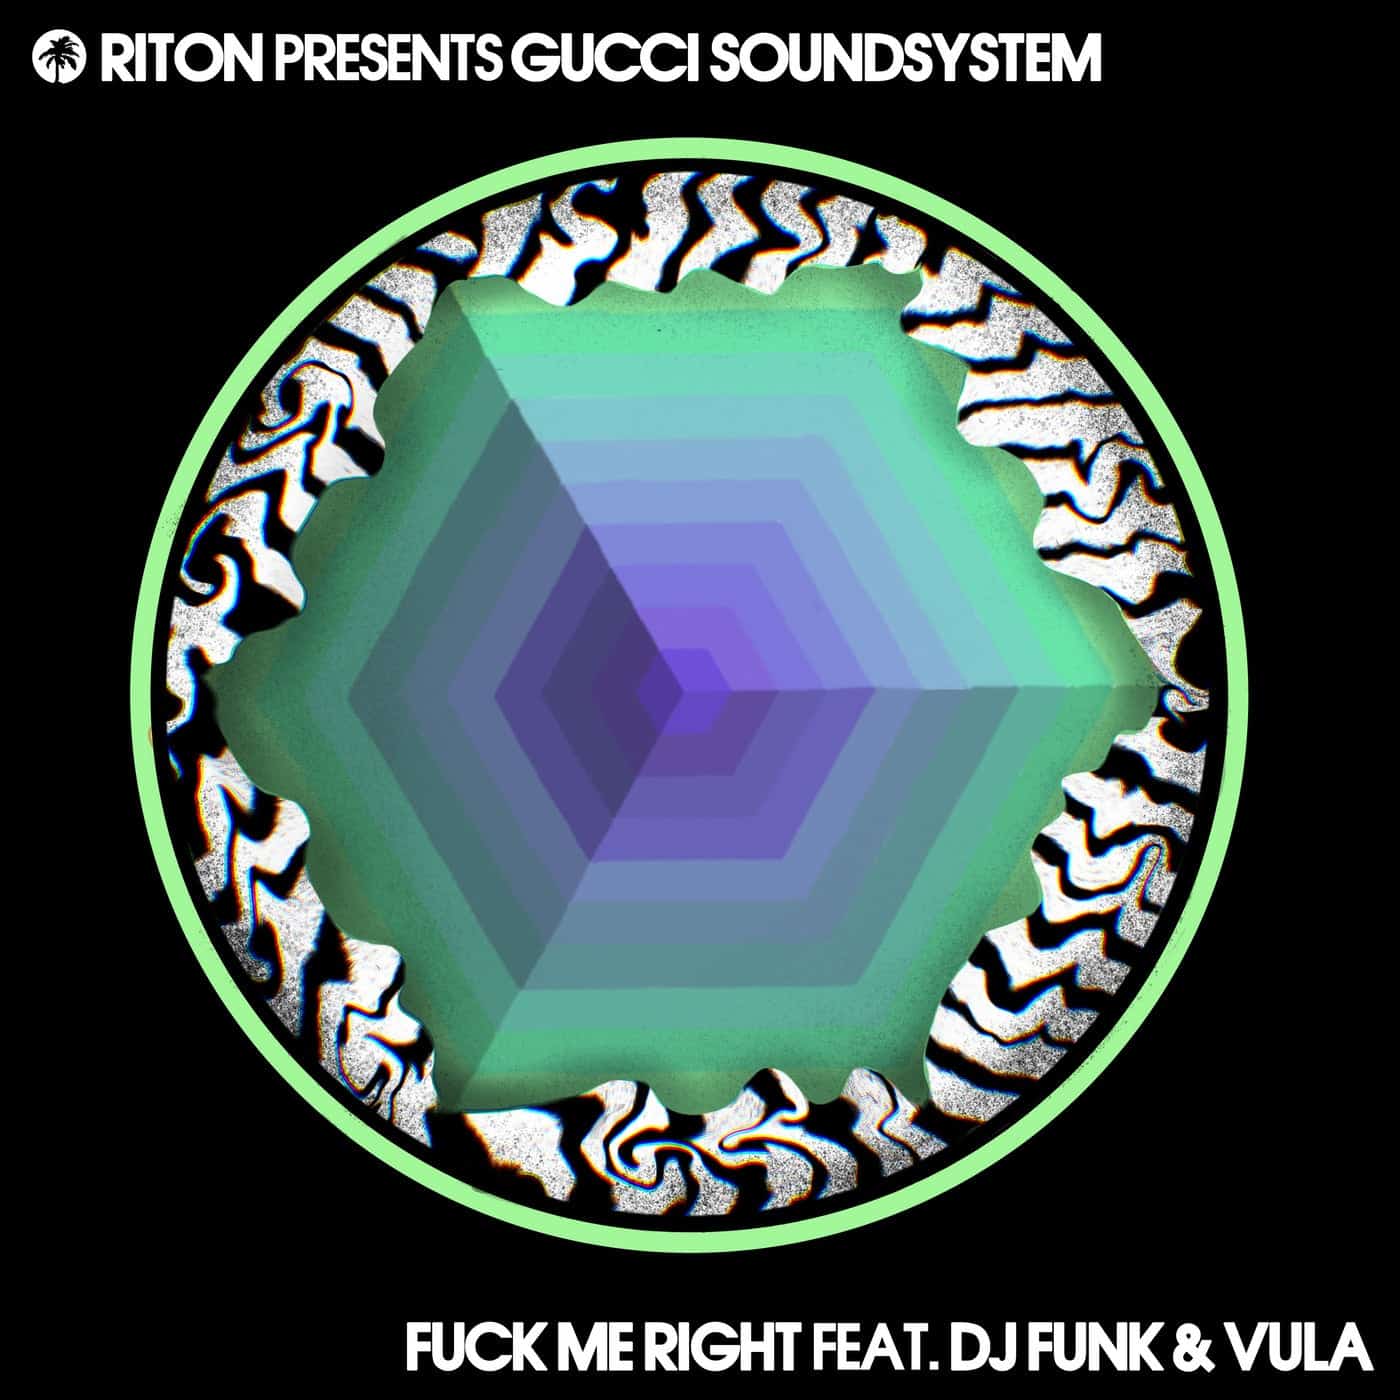 image cover: Riton, Gucci Soundsystem, DJ Funk, Vula - Fuck Me Right feat. DJ Funk & Vula / HOTC1871